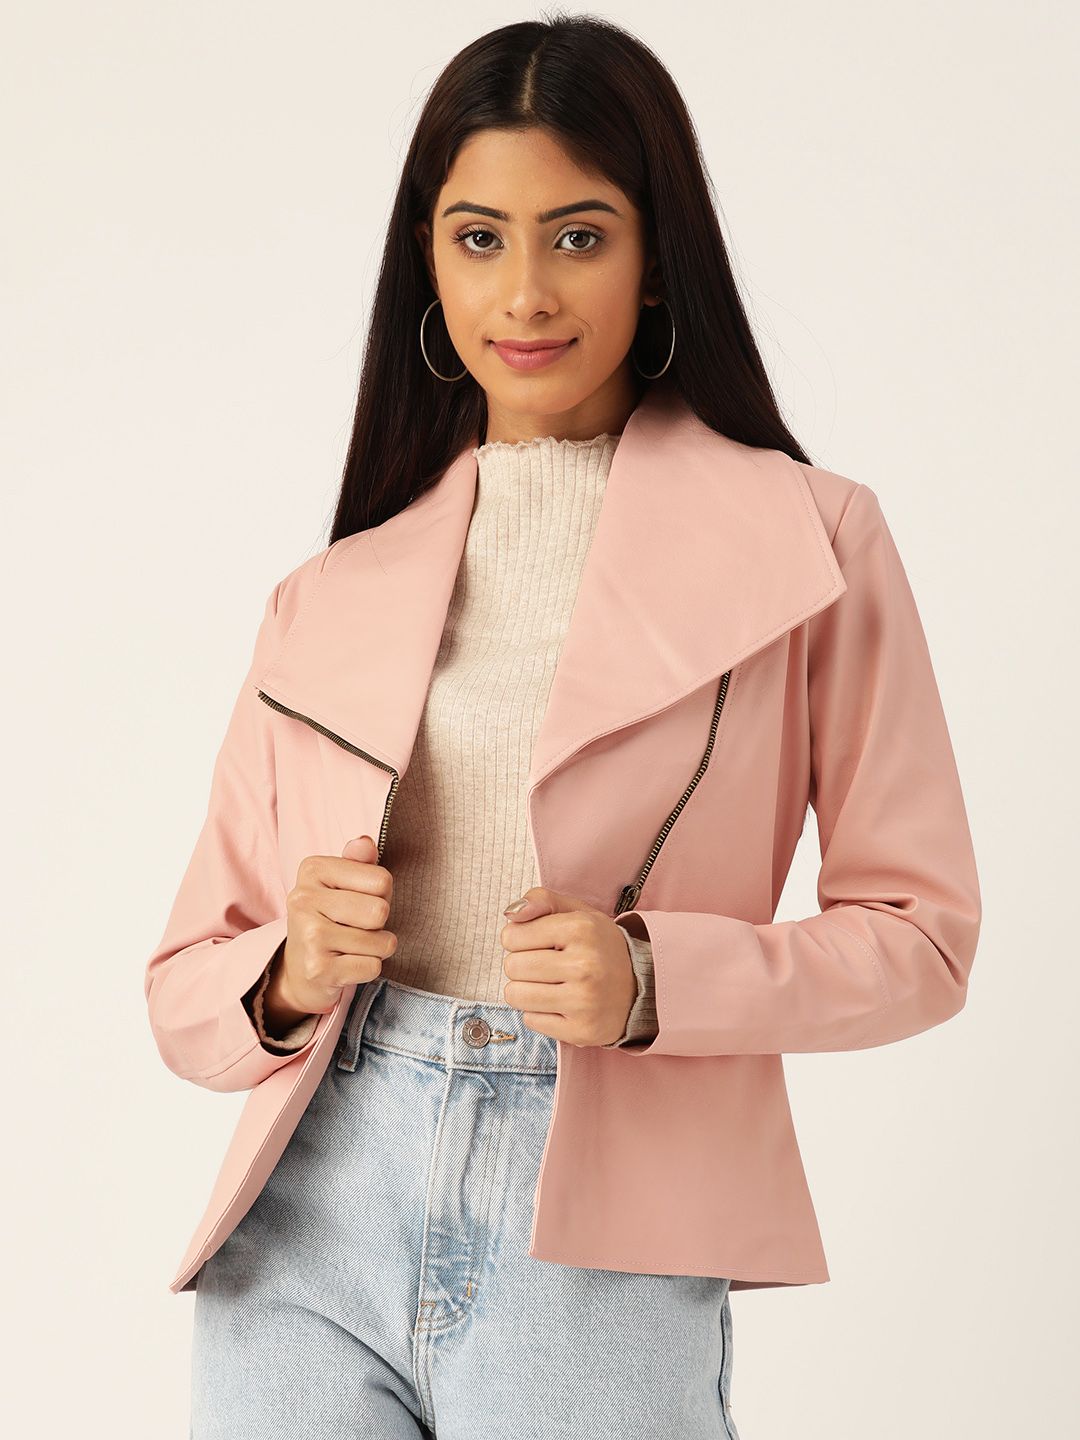 Leather Retail Women Pink Solid Lightweight Biker Jacket Price in India